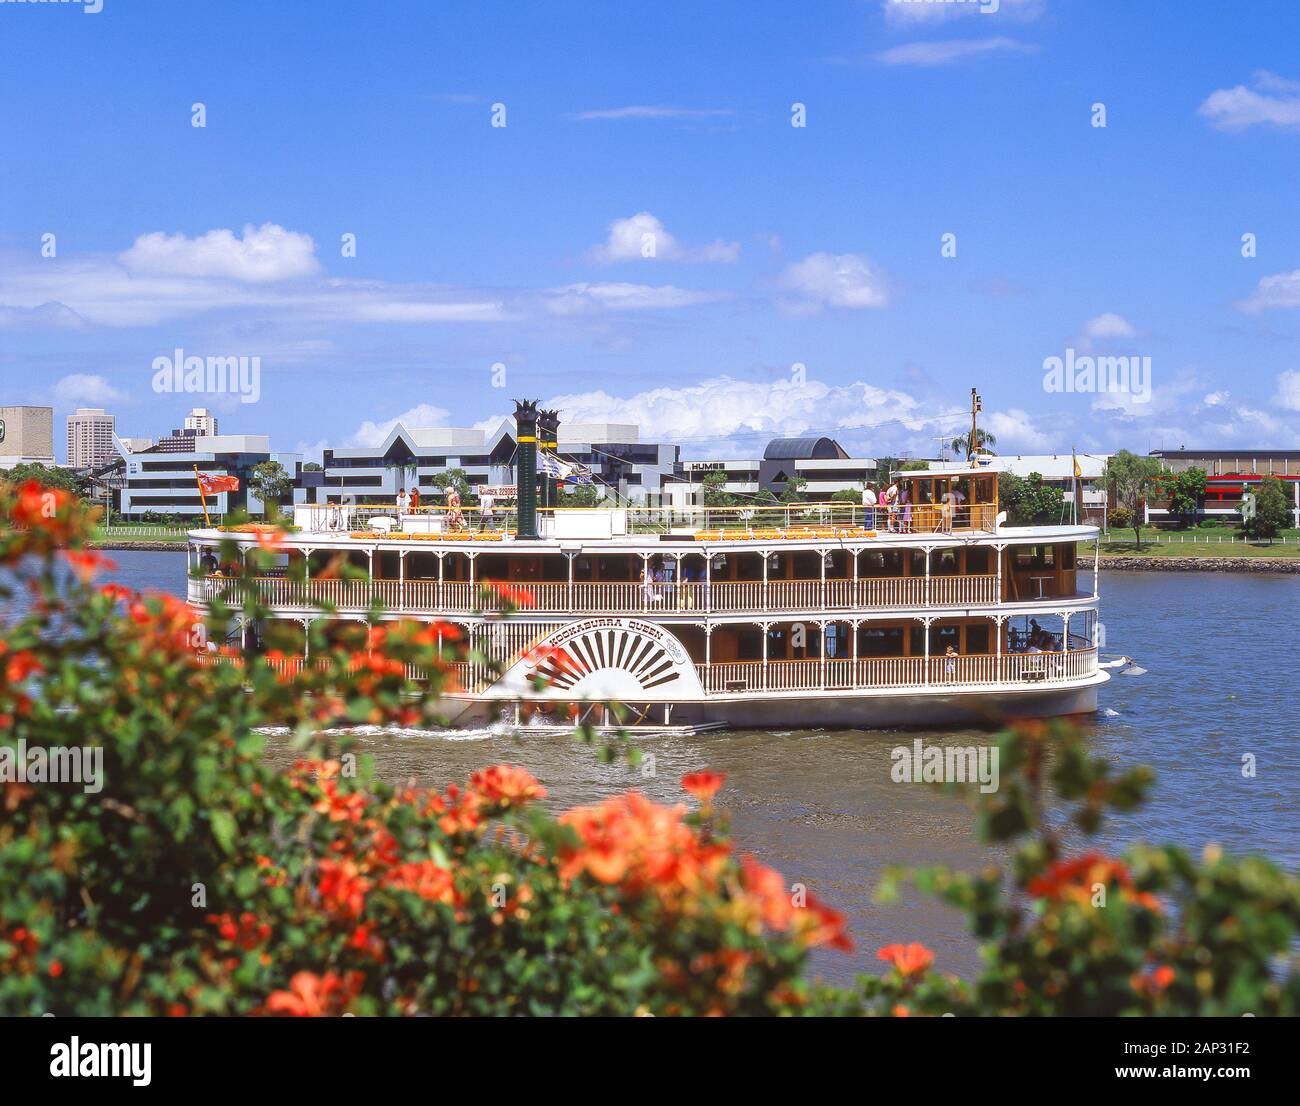 Kookaburra Queen paddle wheeler cruise on Brisbane River, Brisbane, Queensland, Australia Stock Photo